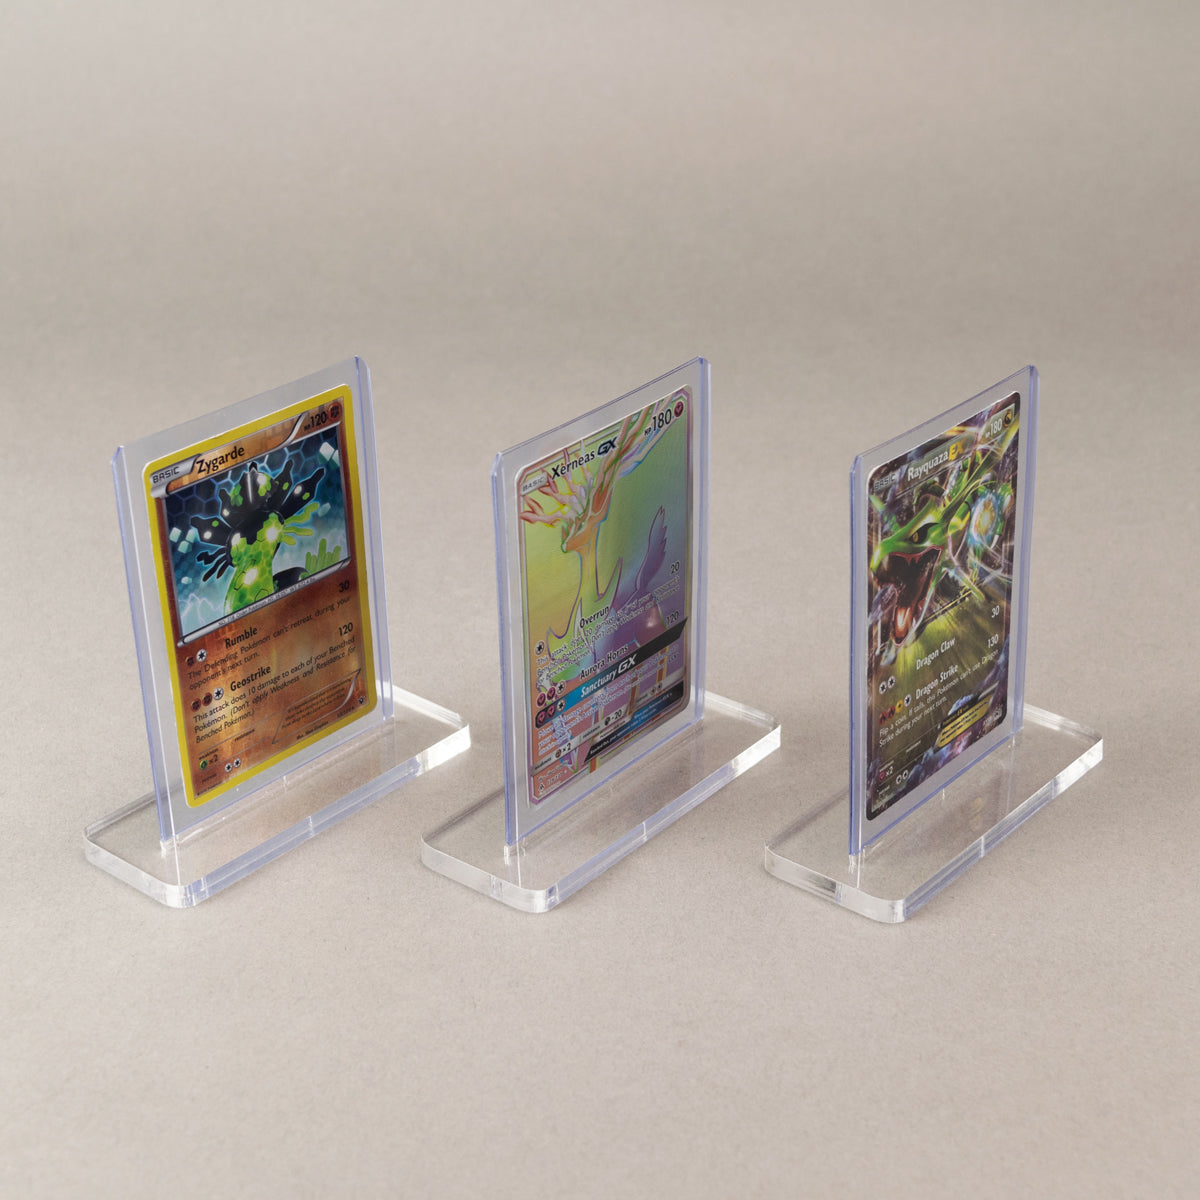 pokemon yugioh cards